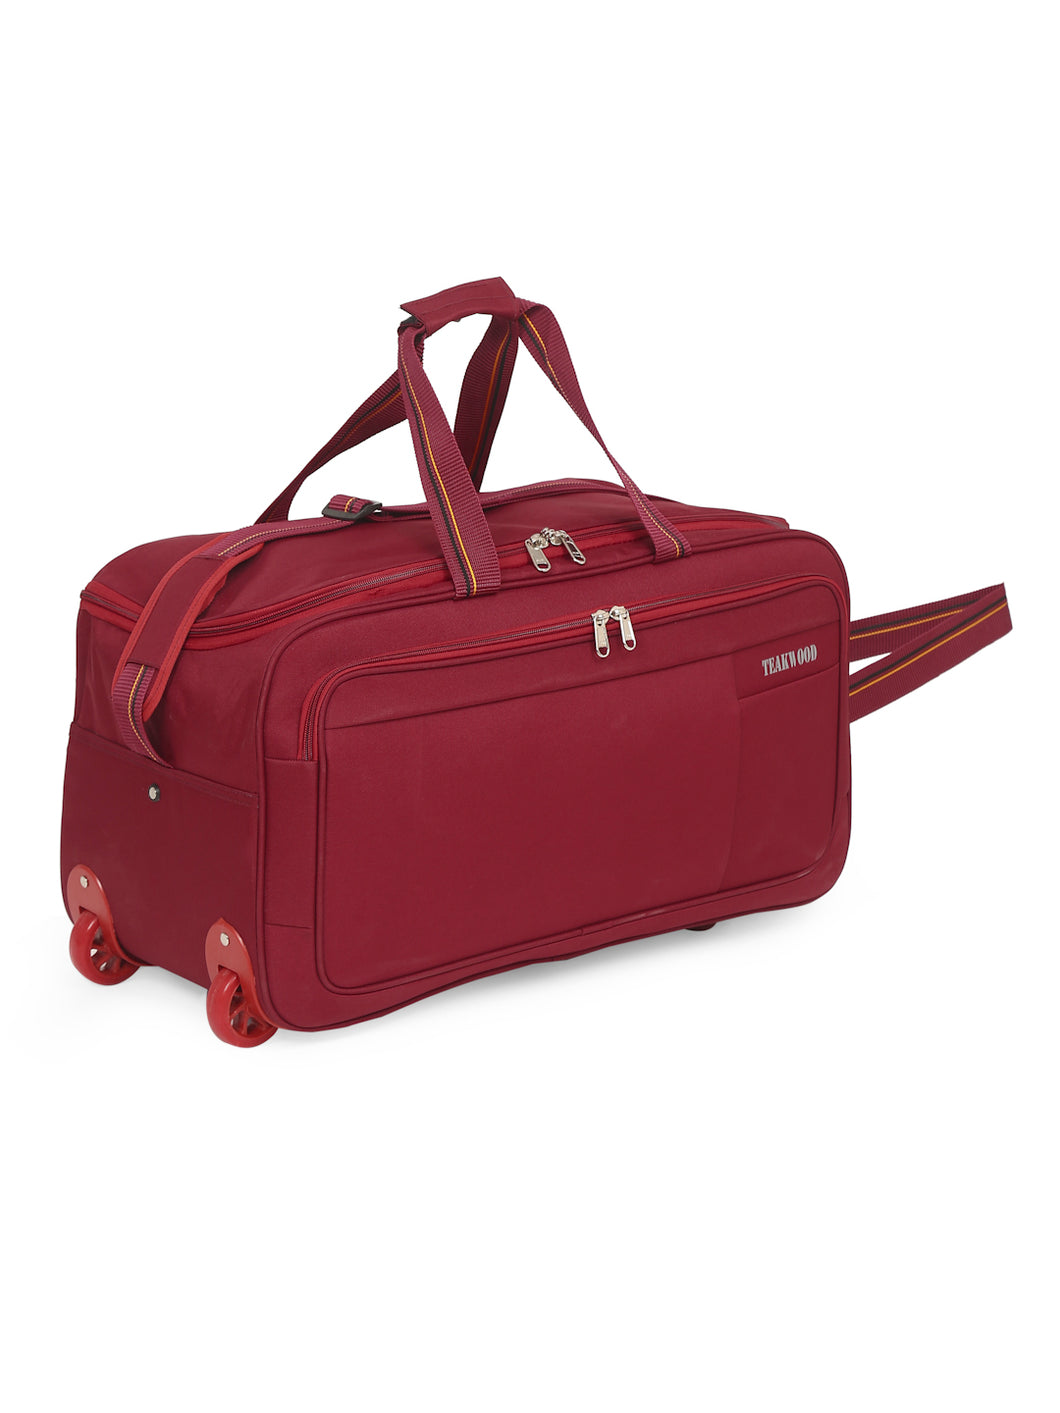 Teakwood Rolling Large Duffel Bag (Red)